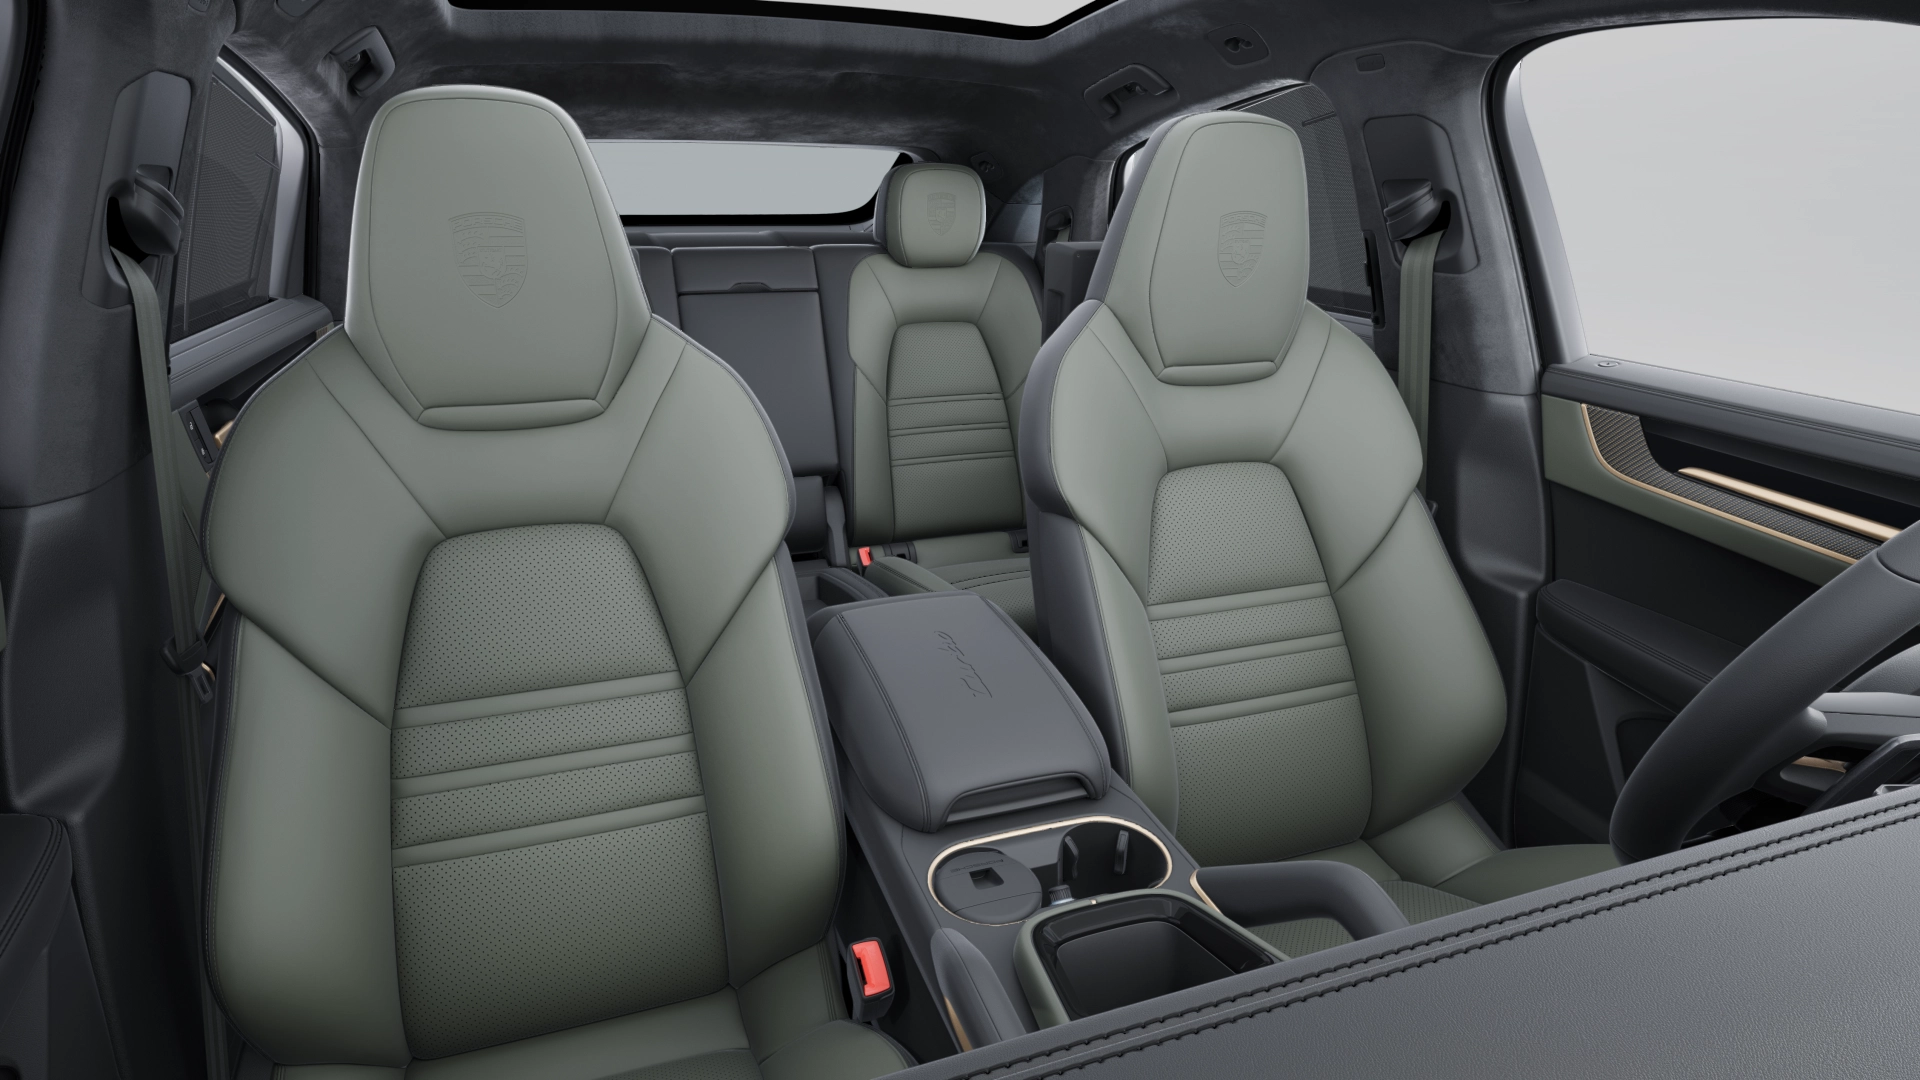 Cayenne Turbo E-Hybrid Coupé interior view